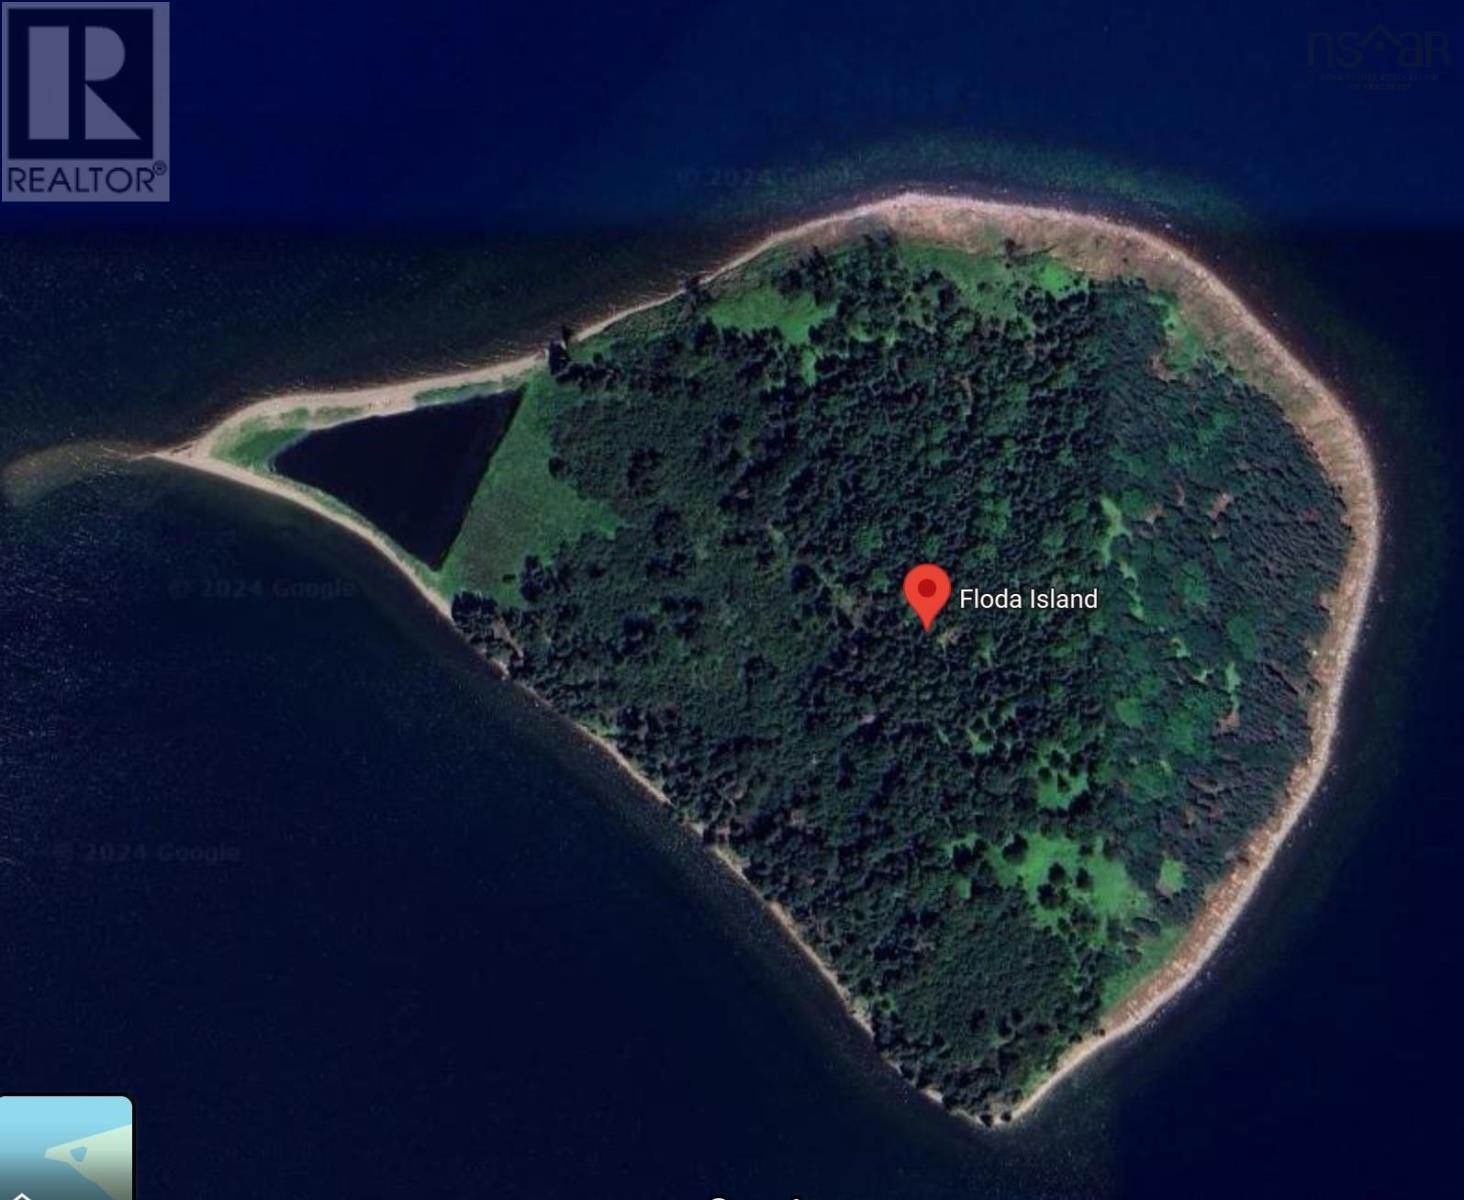 Floda Island located in Inverness, Nova Scotia